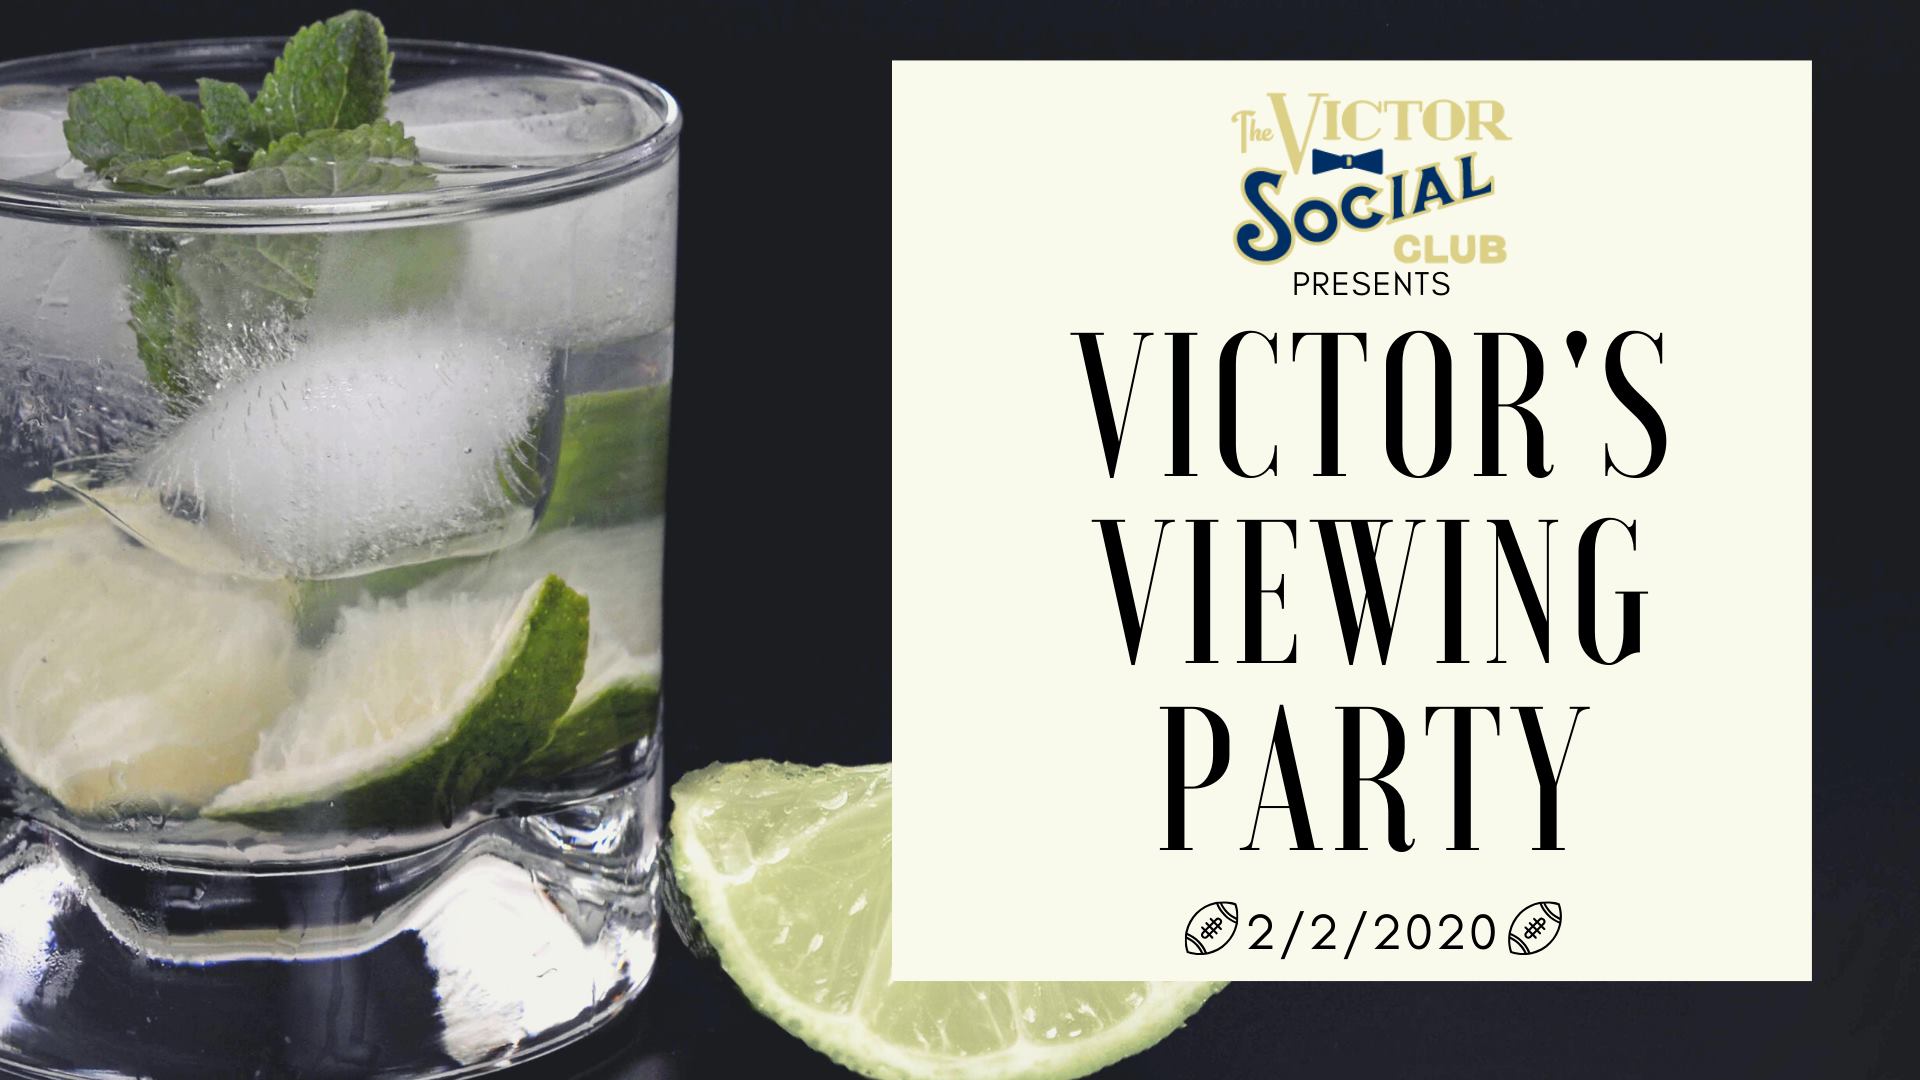 Victor Social Club Super Bowl viewing party invitation